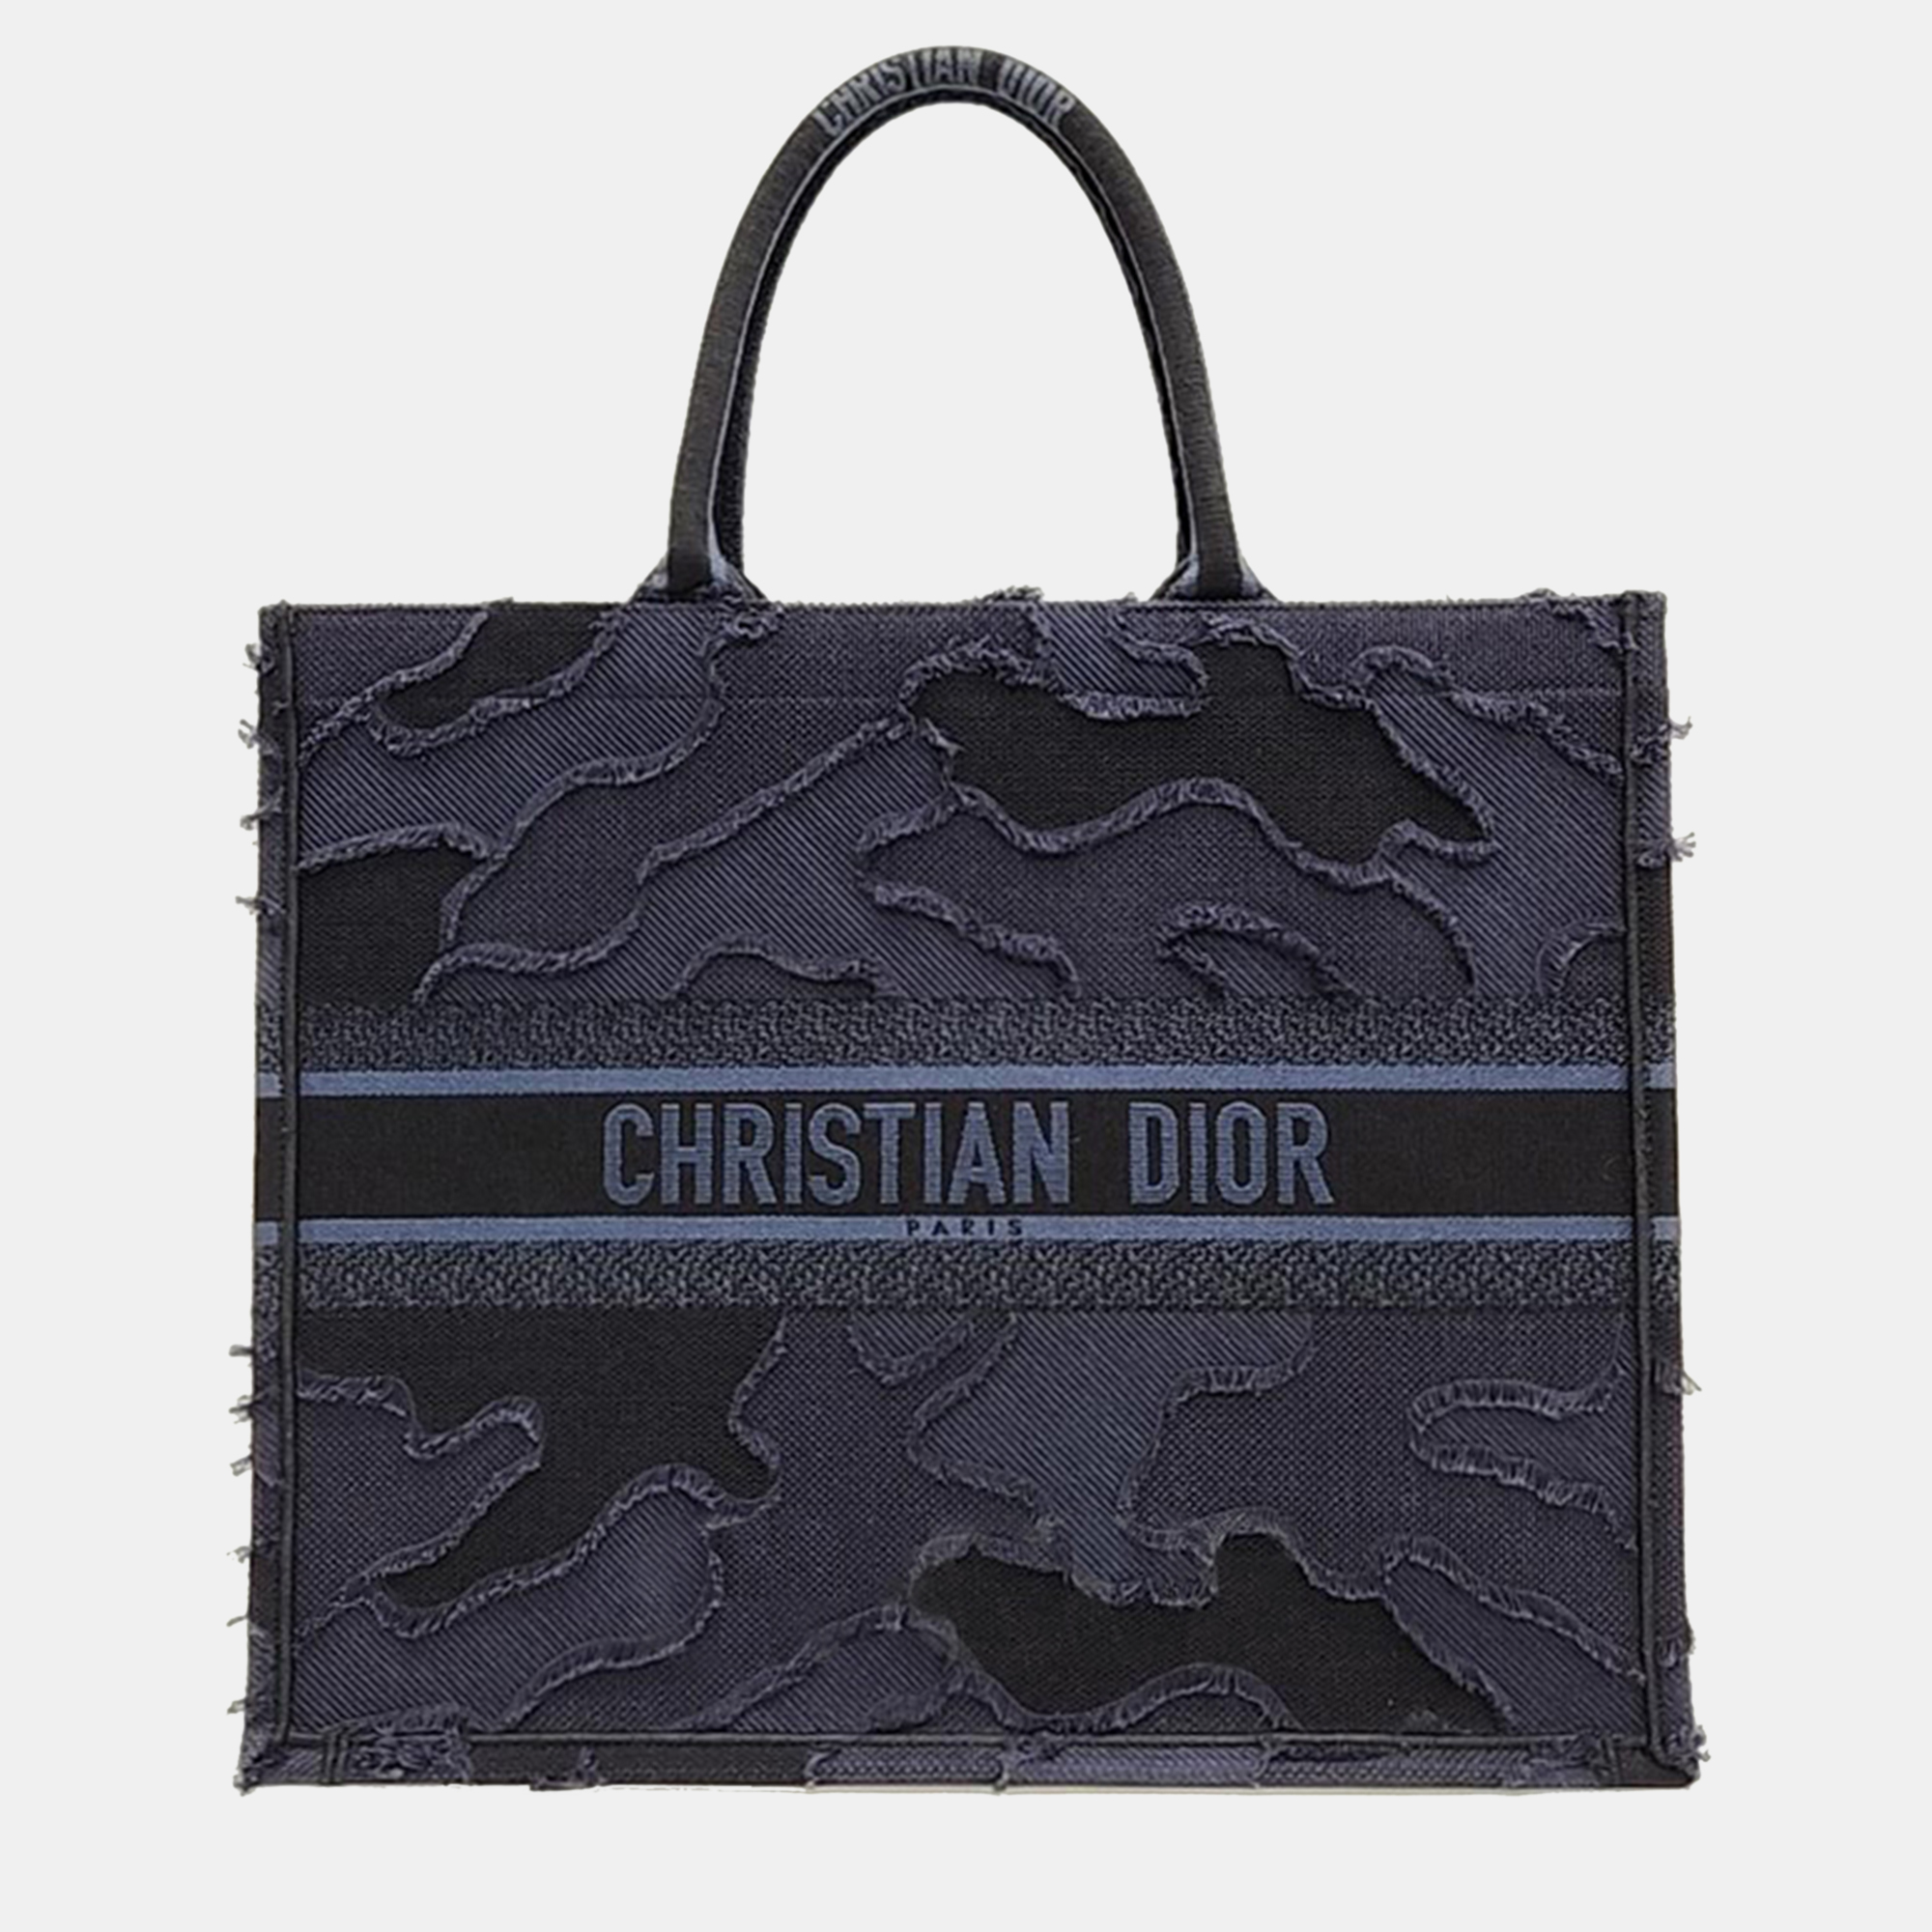 Christian dior book tote bag 42